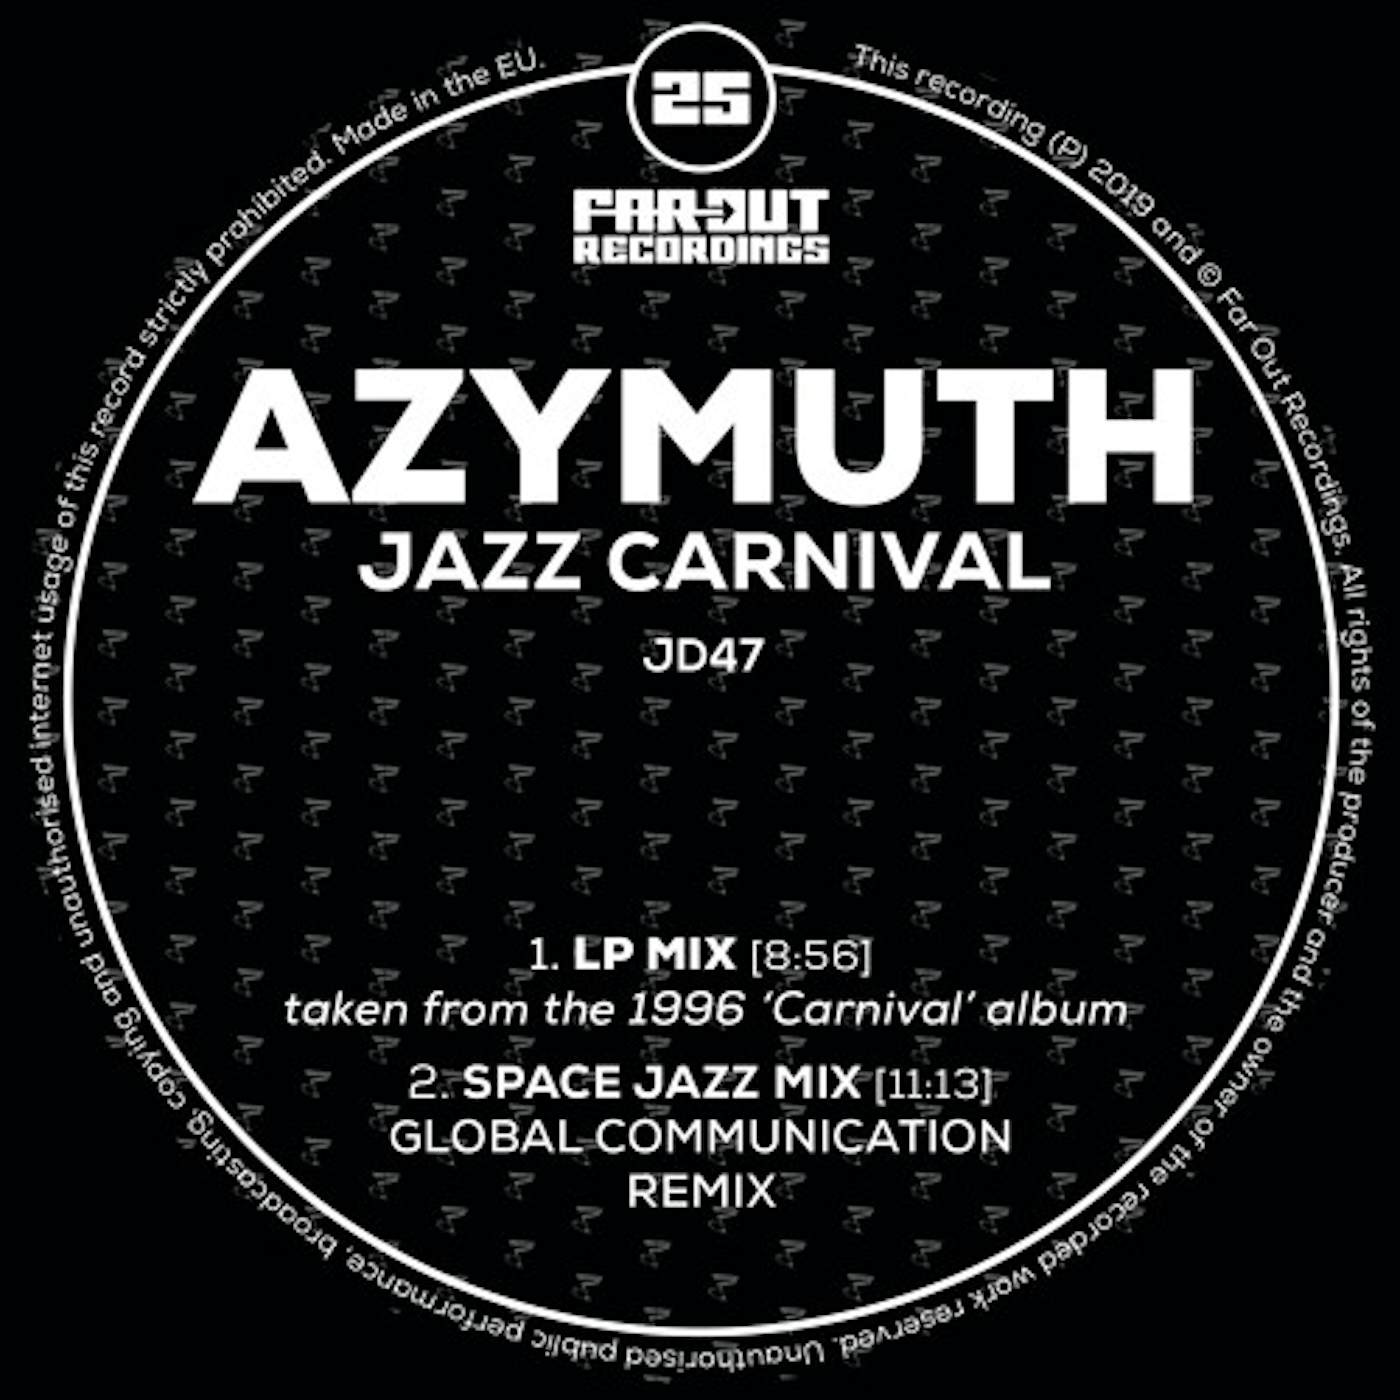 Azymuth Jazz Carnival Vinyl Record